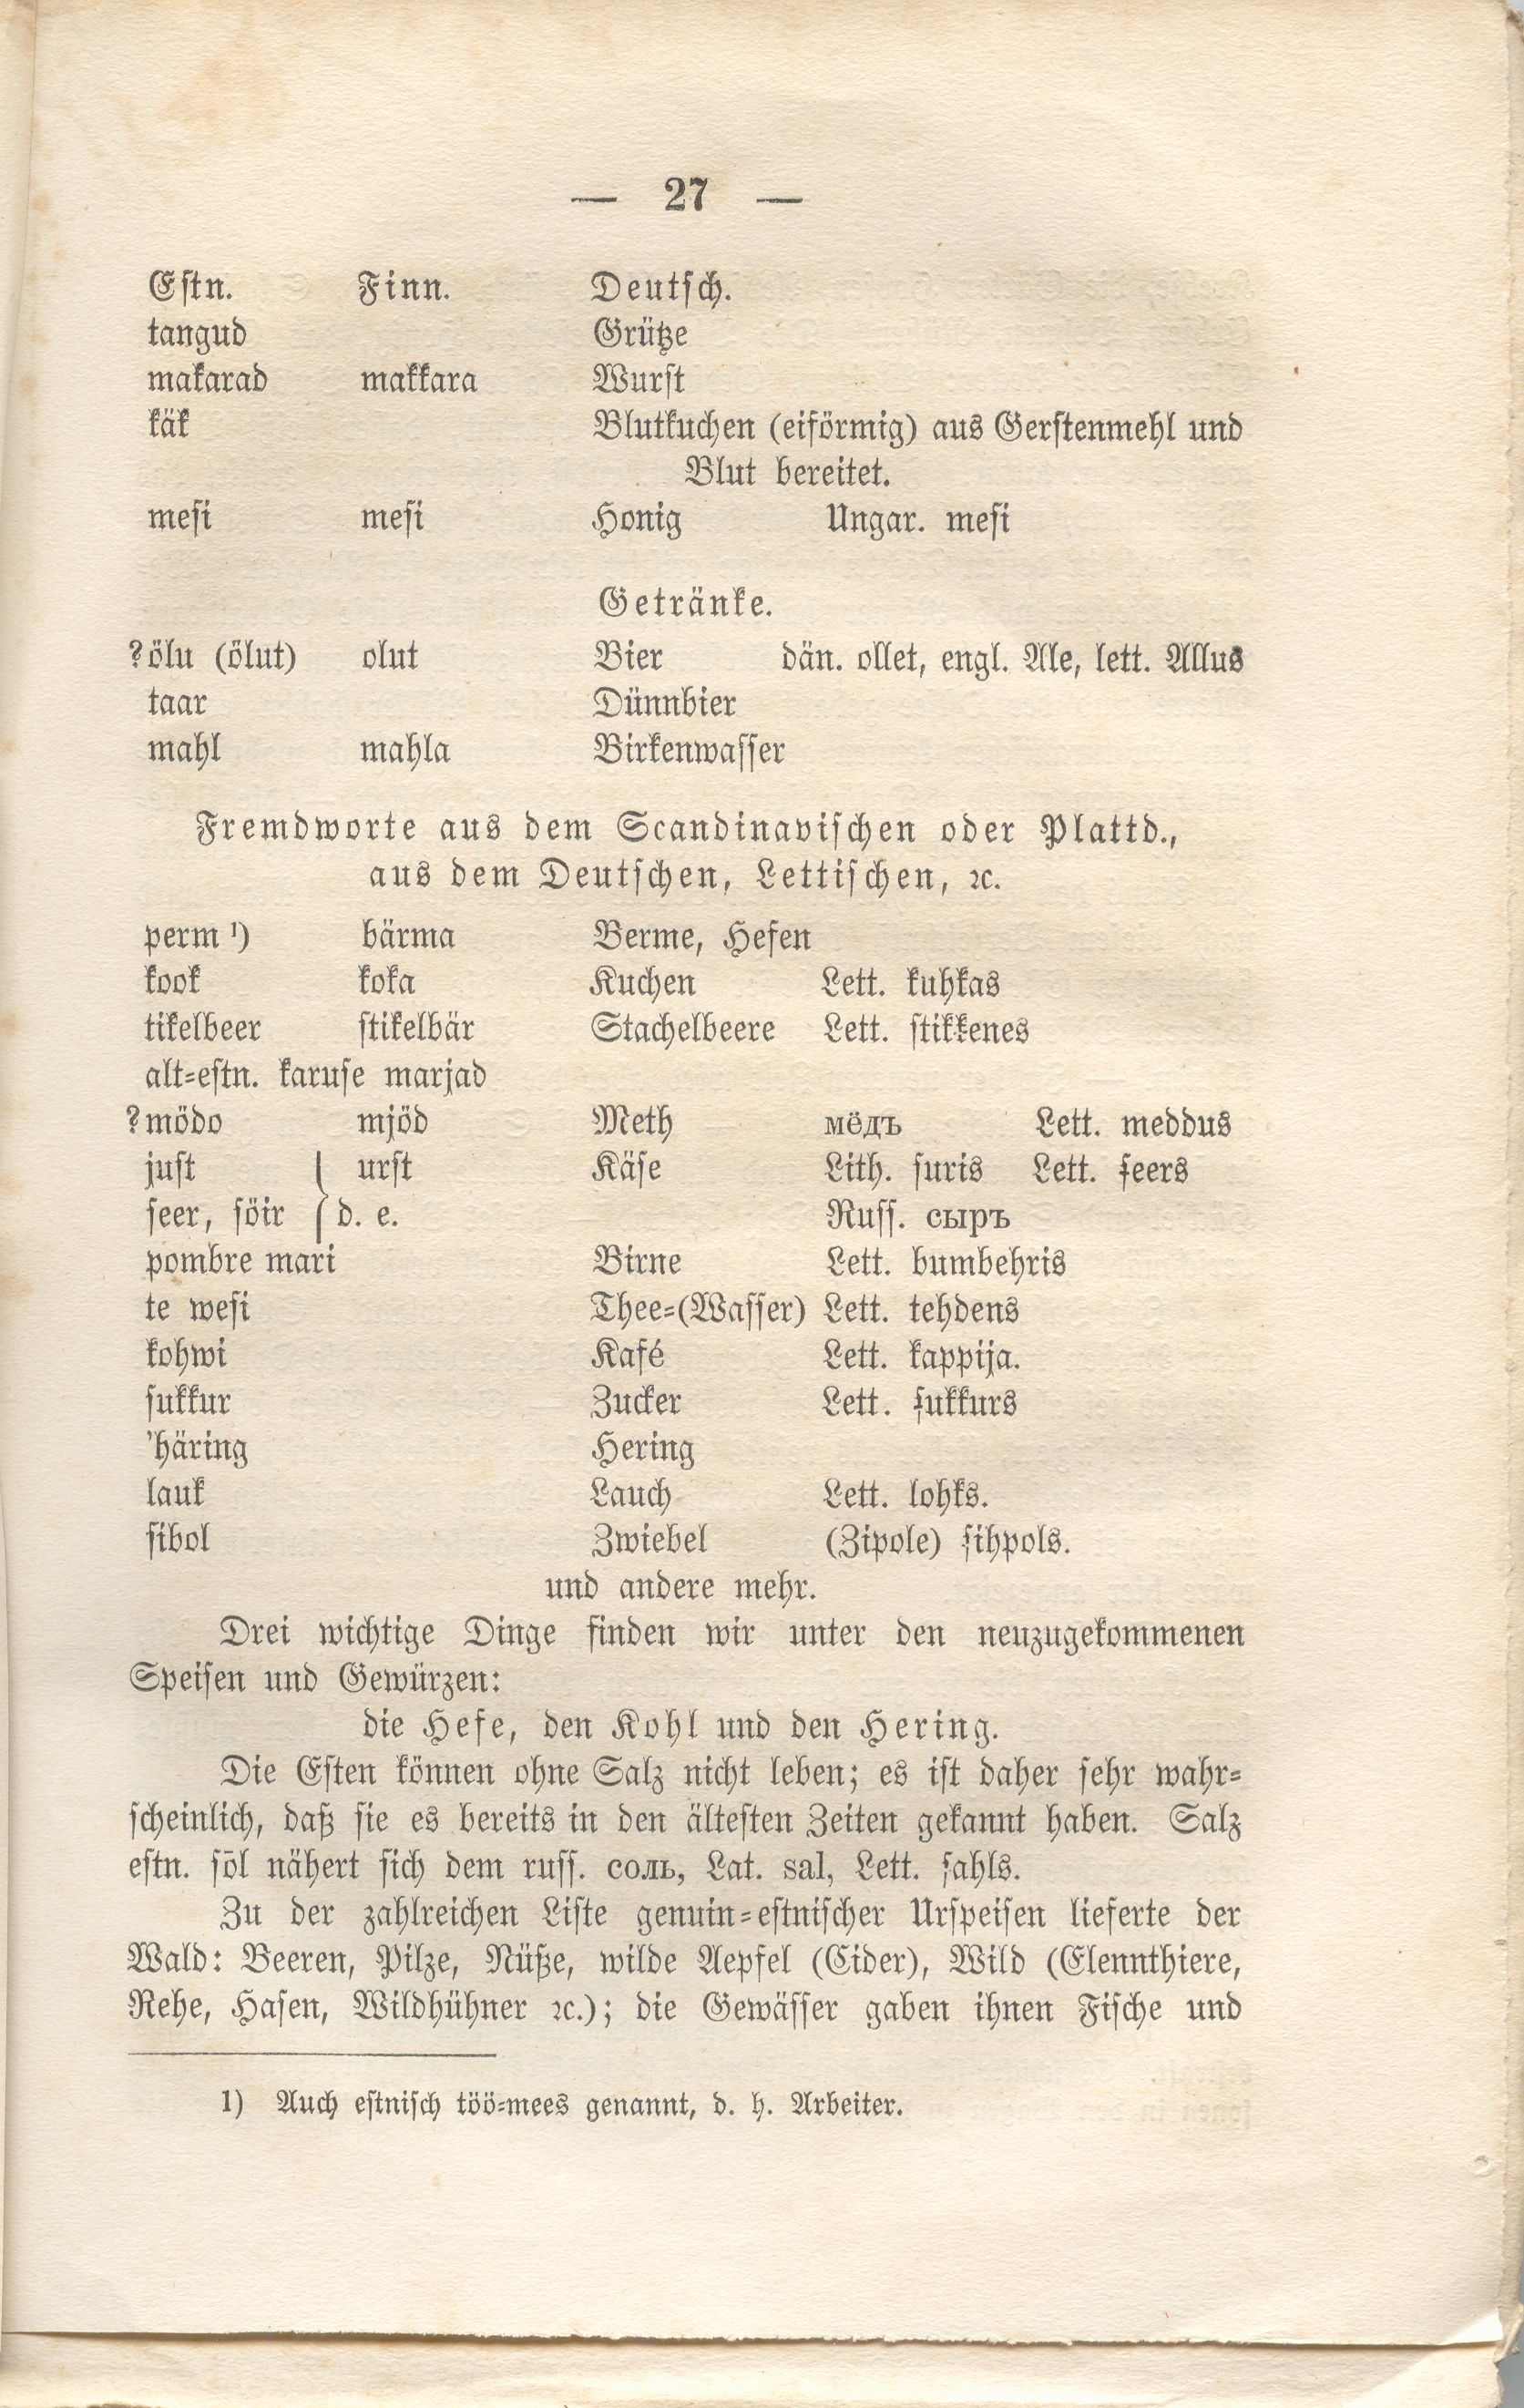 Wagien (1868) | 31. (27) Основной текст